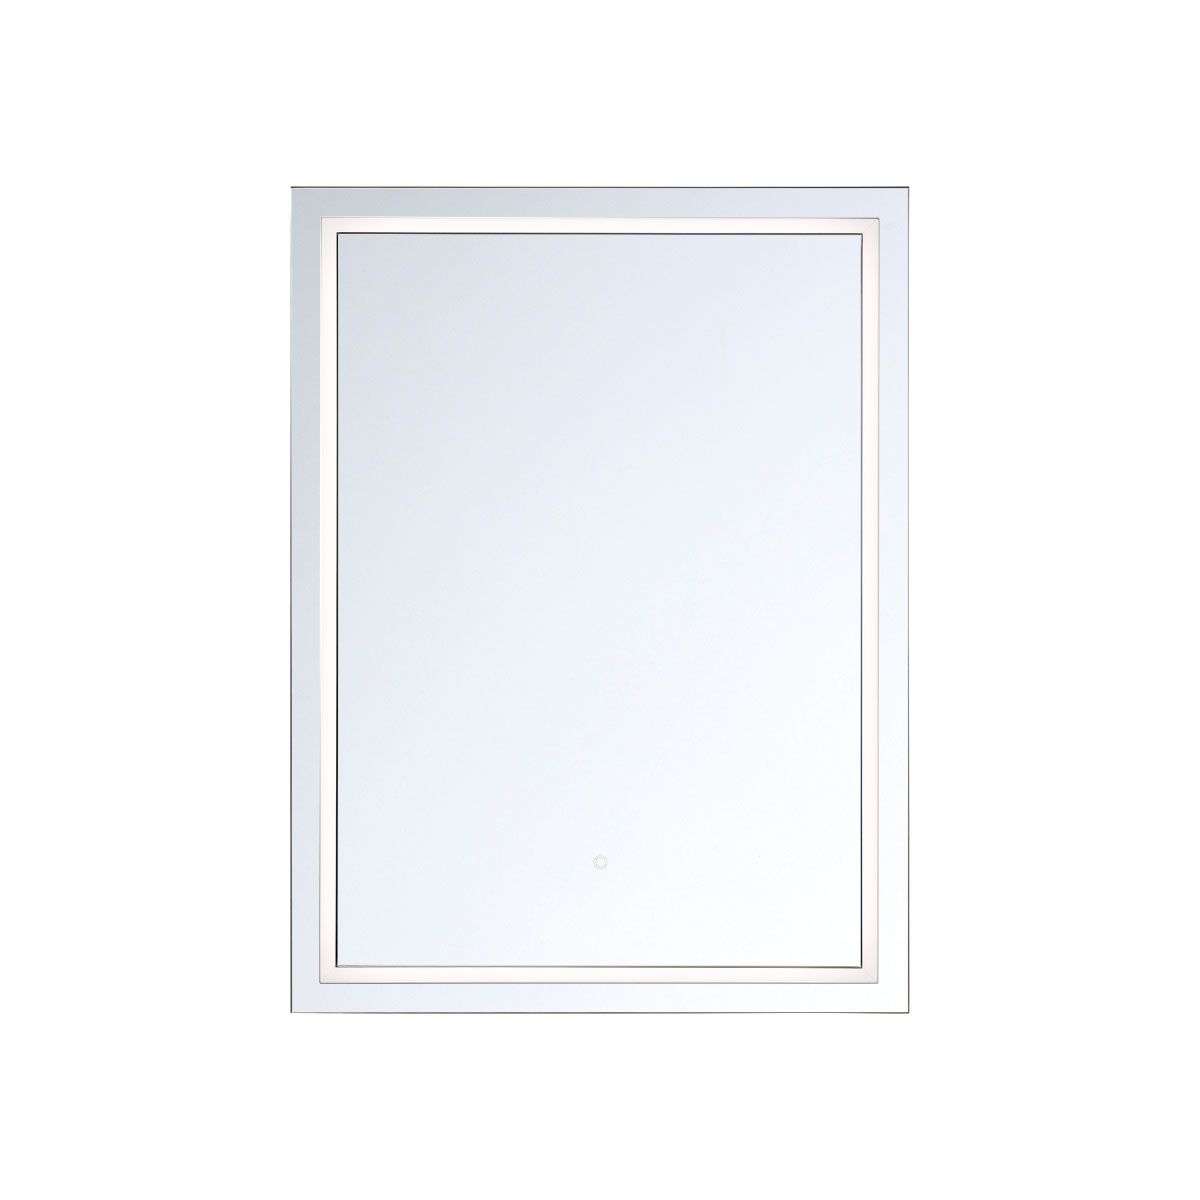 Eris 24 In x 32 In. White LED Wall Mirror